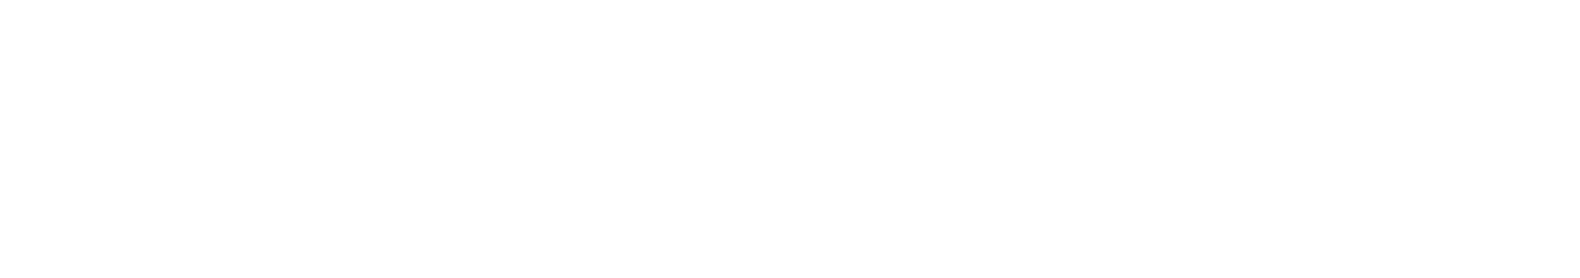 CoStar Group logo large for dark backgrounds (transparent PNG)